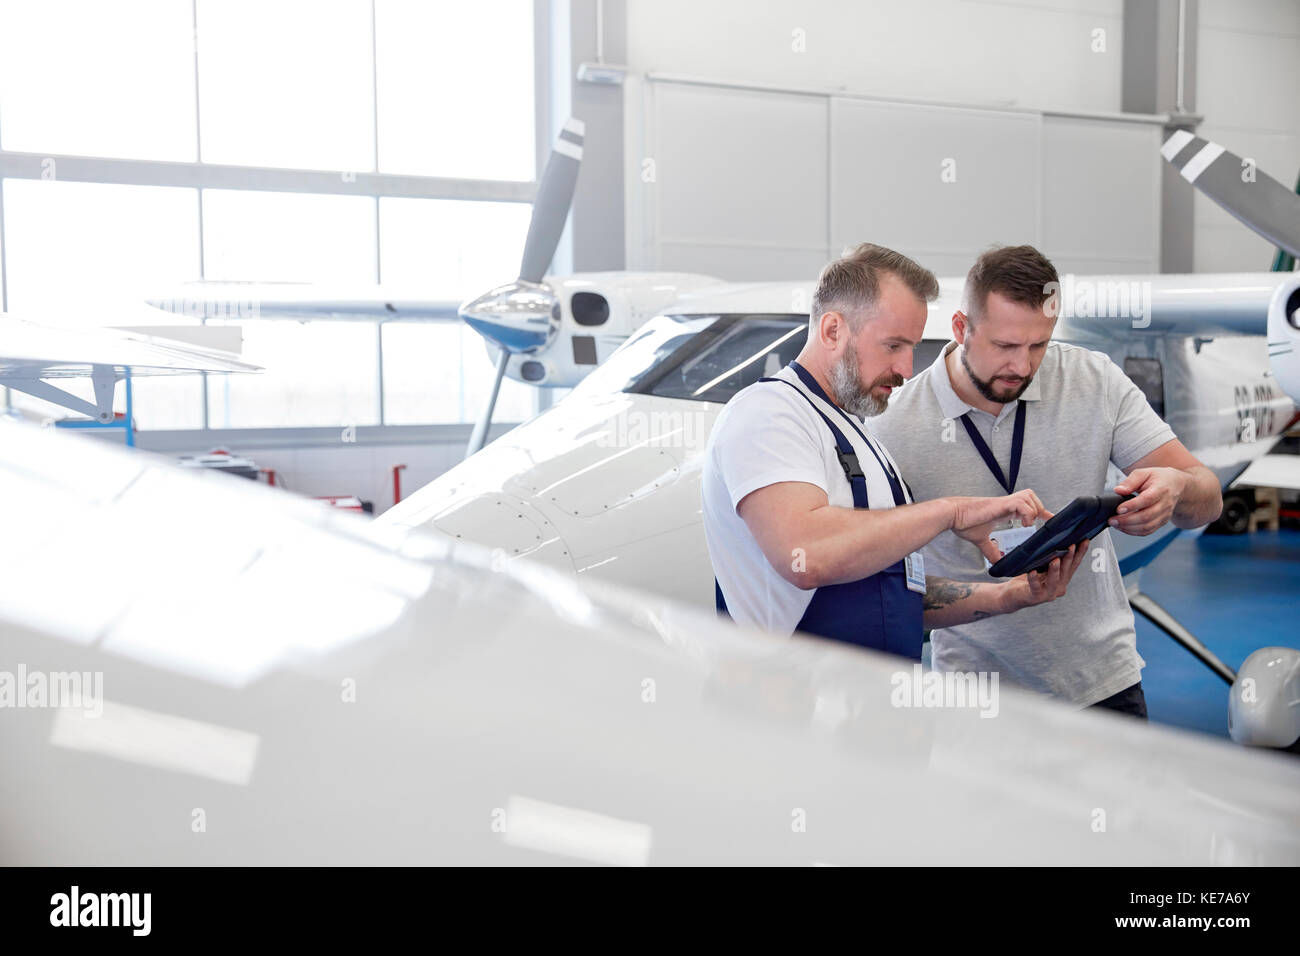 Male mechanic engineers using digital tablet near airplane in hangar Stock Photo